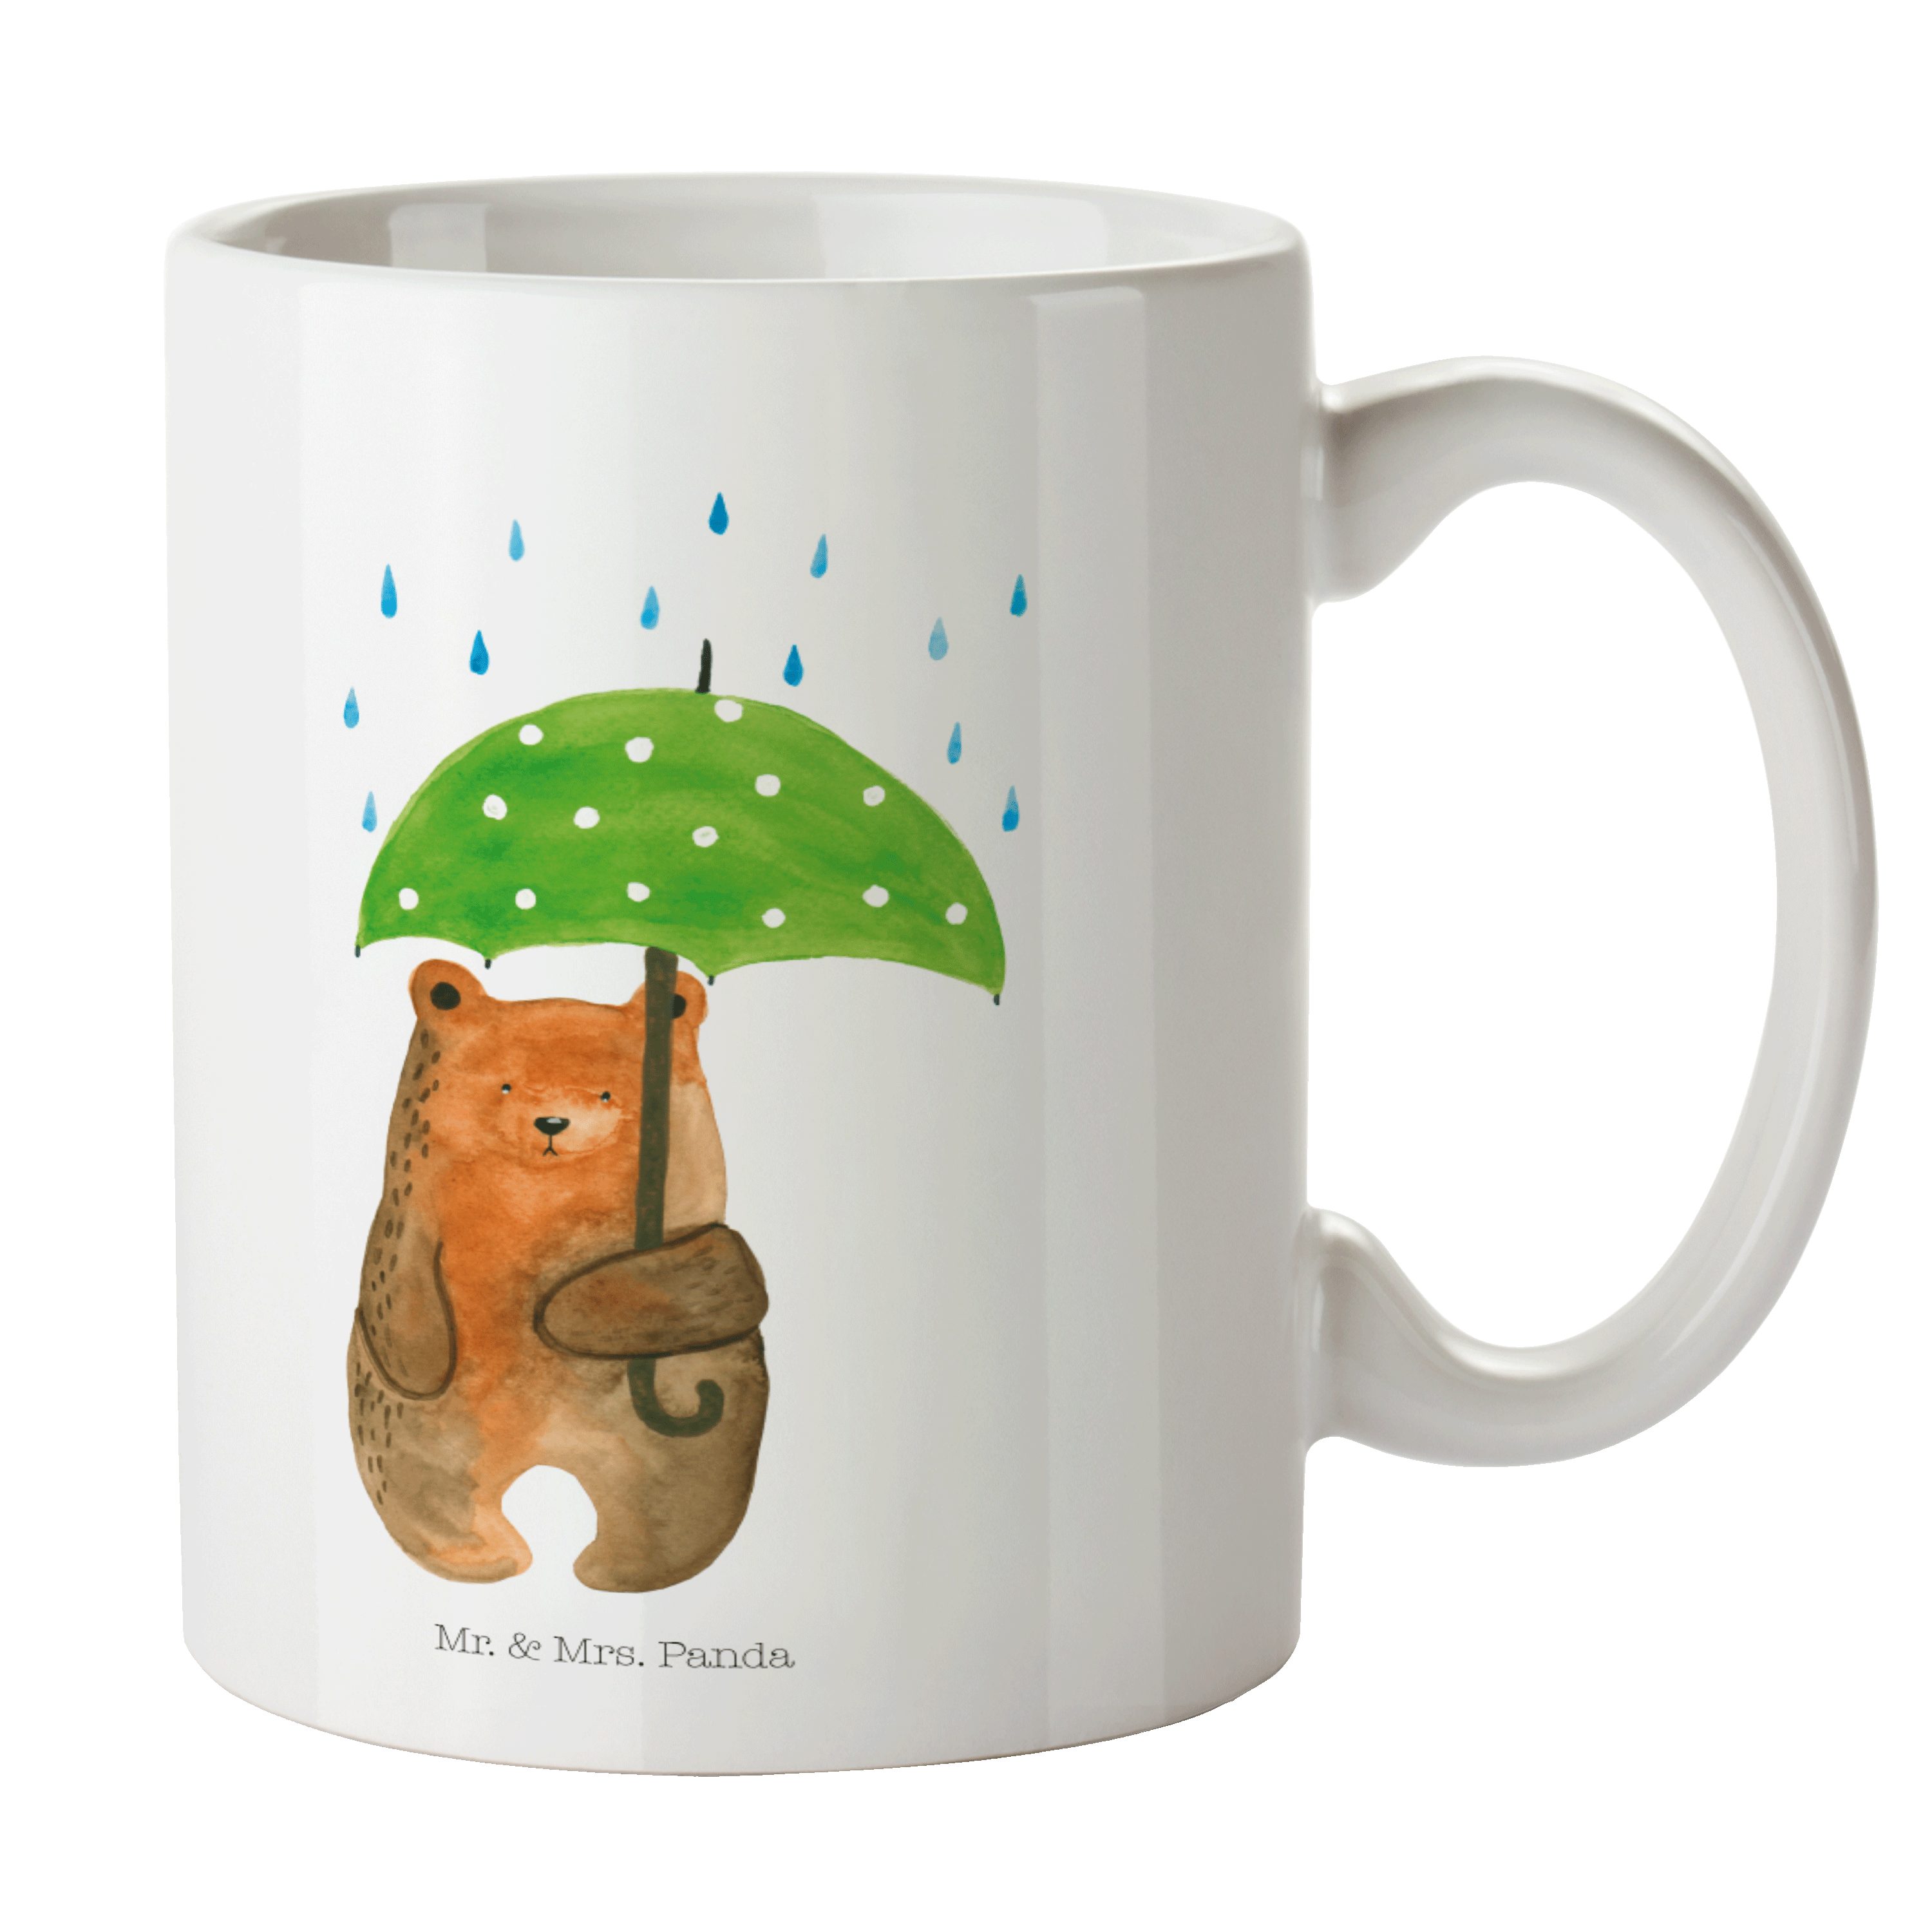 Mr. & Mrs. Panda Tasse Bär mit Regenschirm - Weiß - Geschenk, Freunde, Kaffeetasse, Büro Tas, Keramik